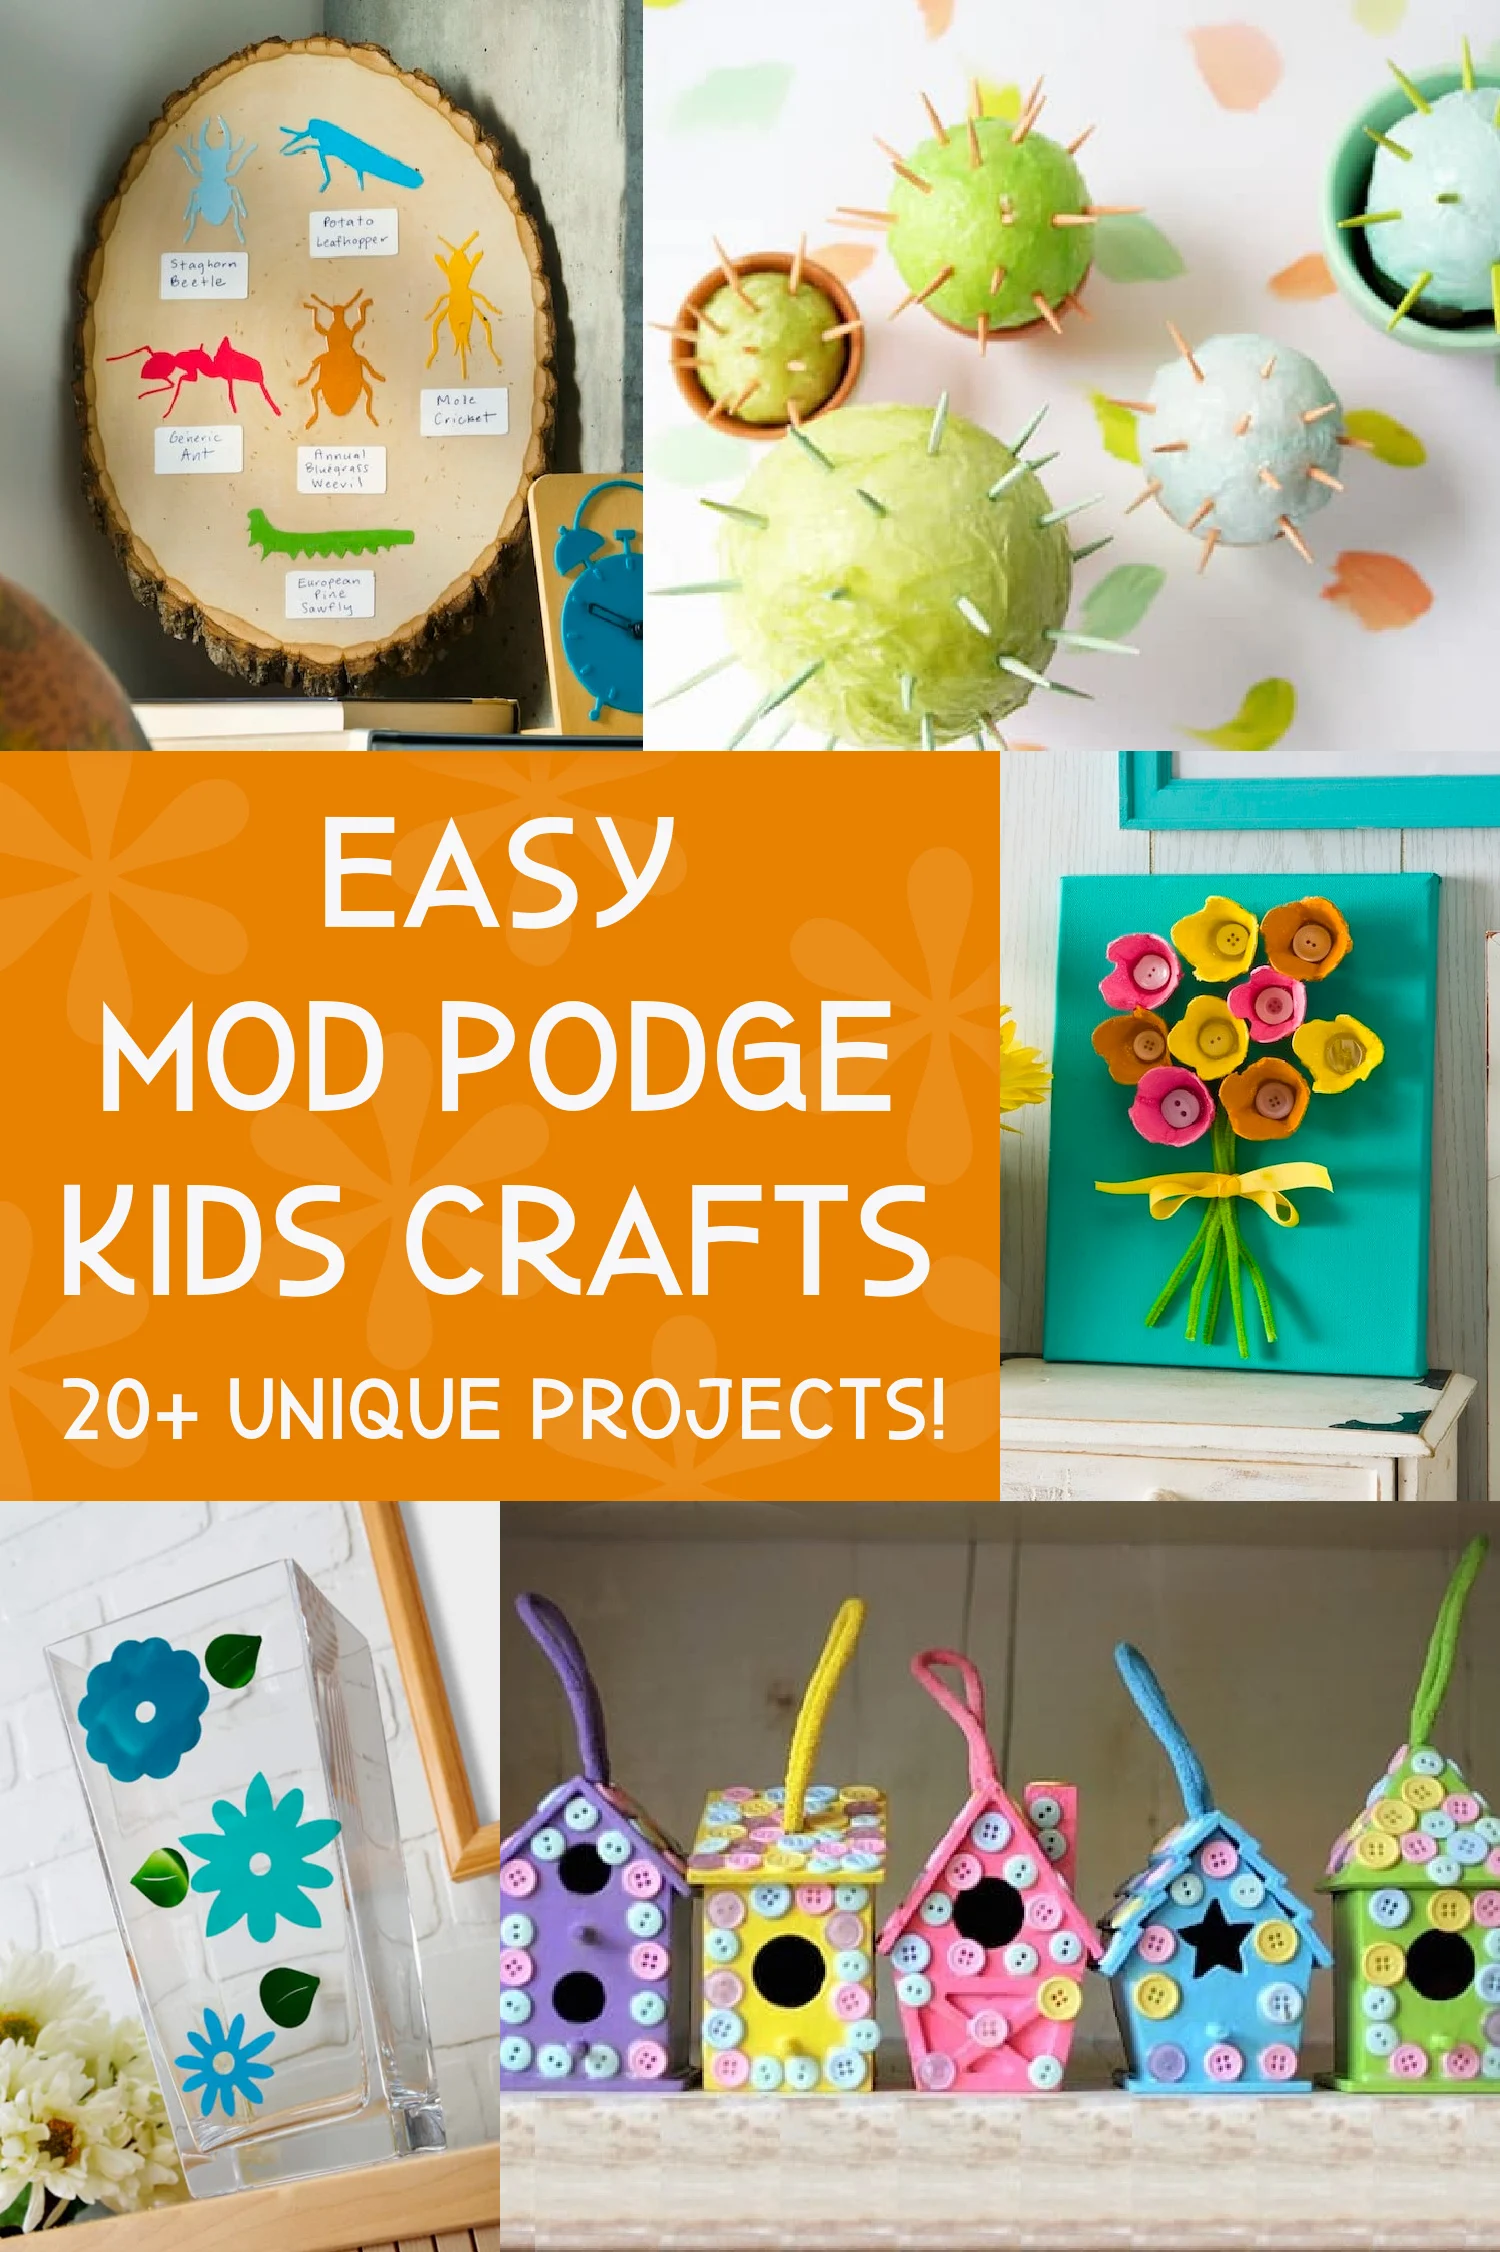 https://modpodgerocksblog.b-cdn.net/wp-content/uploads/2021/03/Mod-Podge-Kids-Crafts.jpg.webp